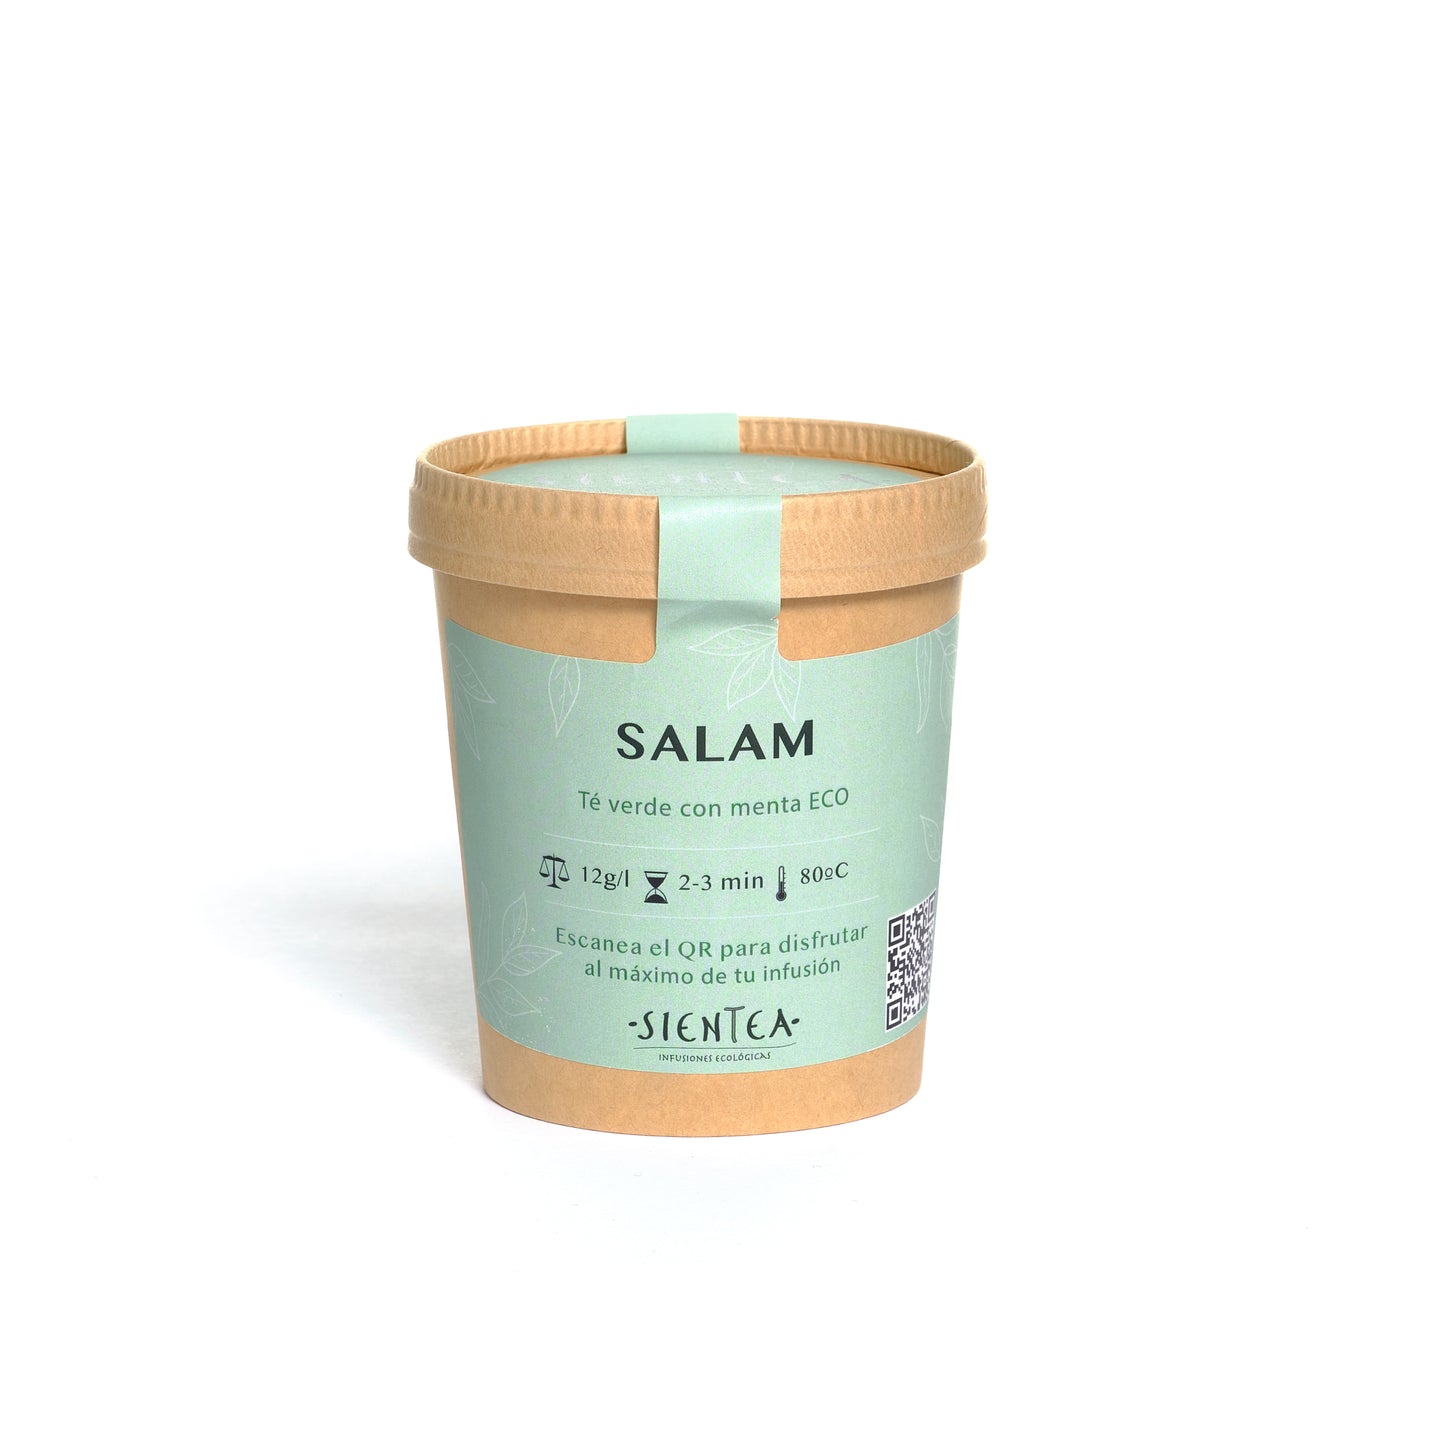 SALAM - Té Verde con menta ECO - 70g